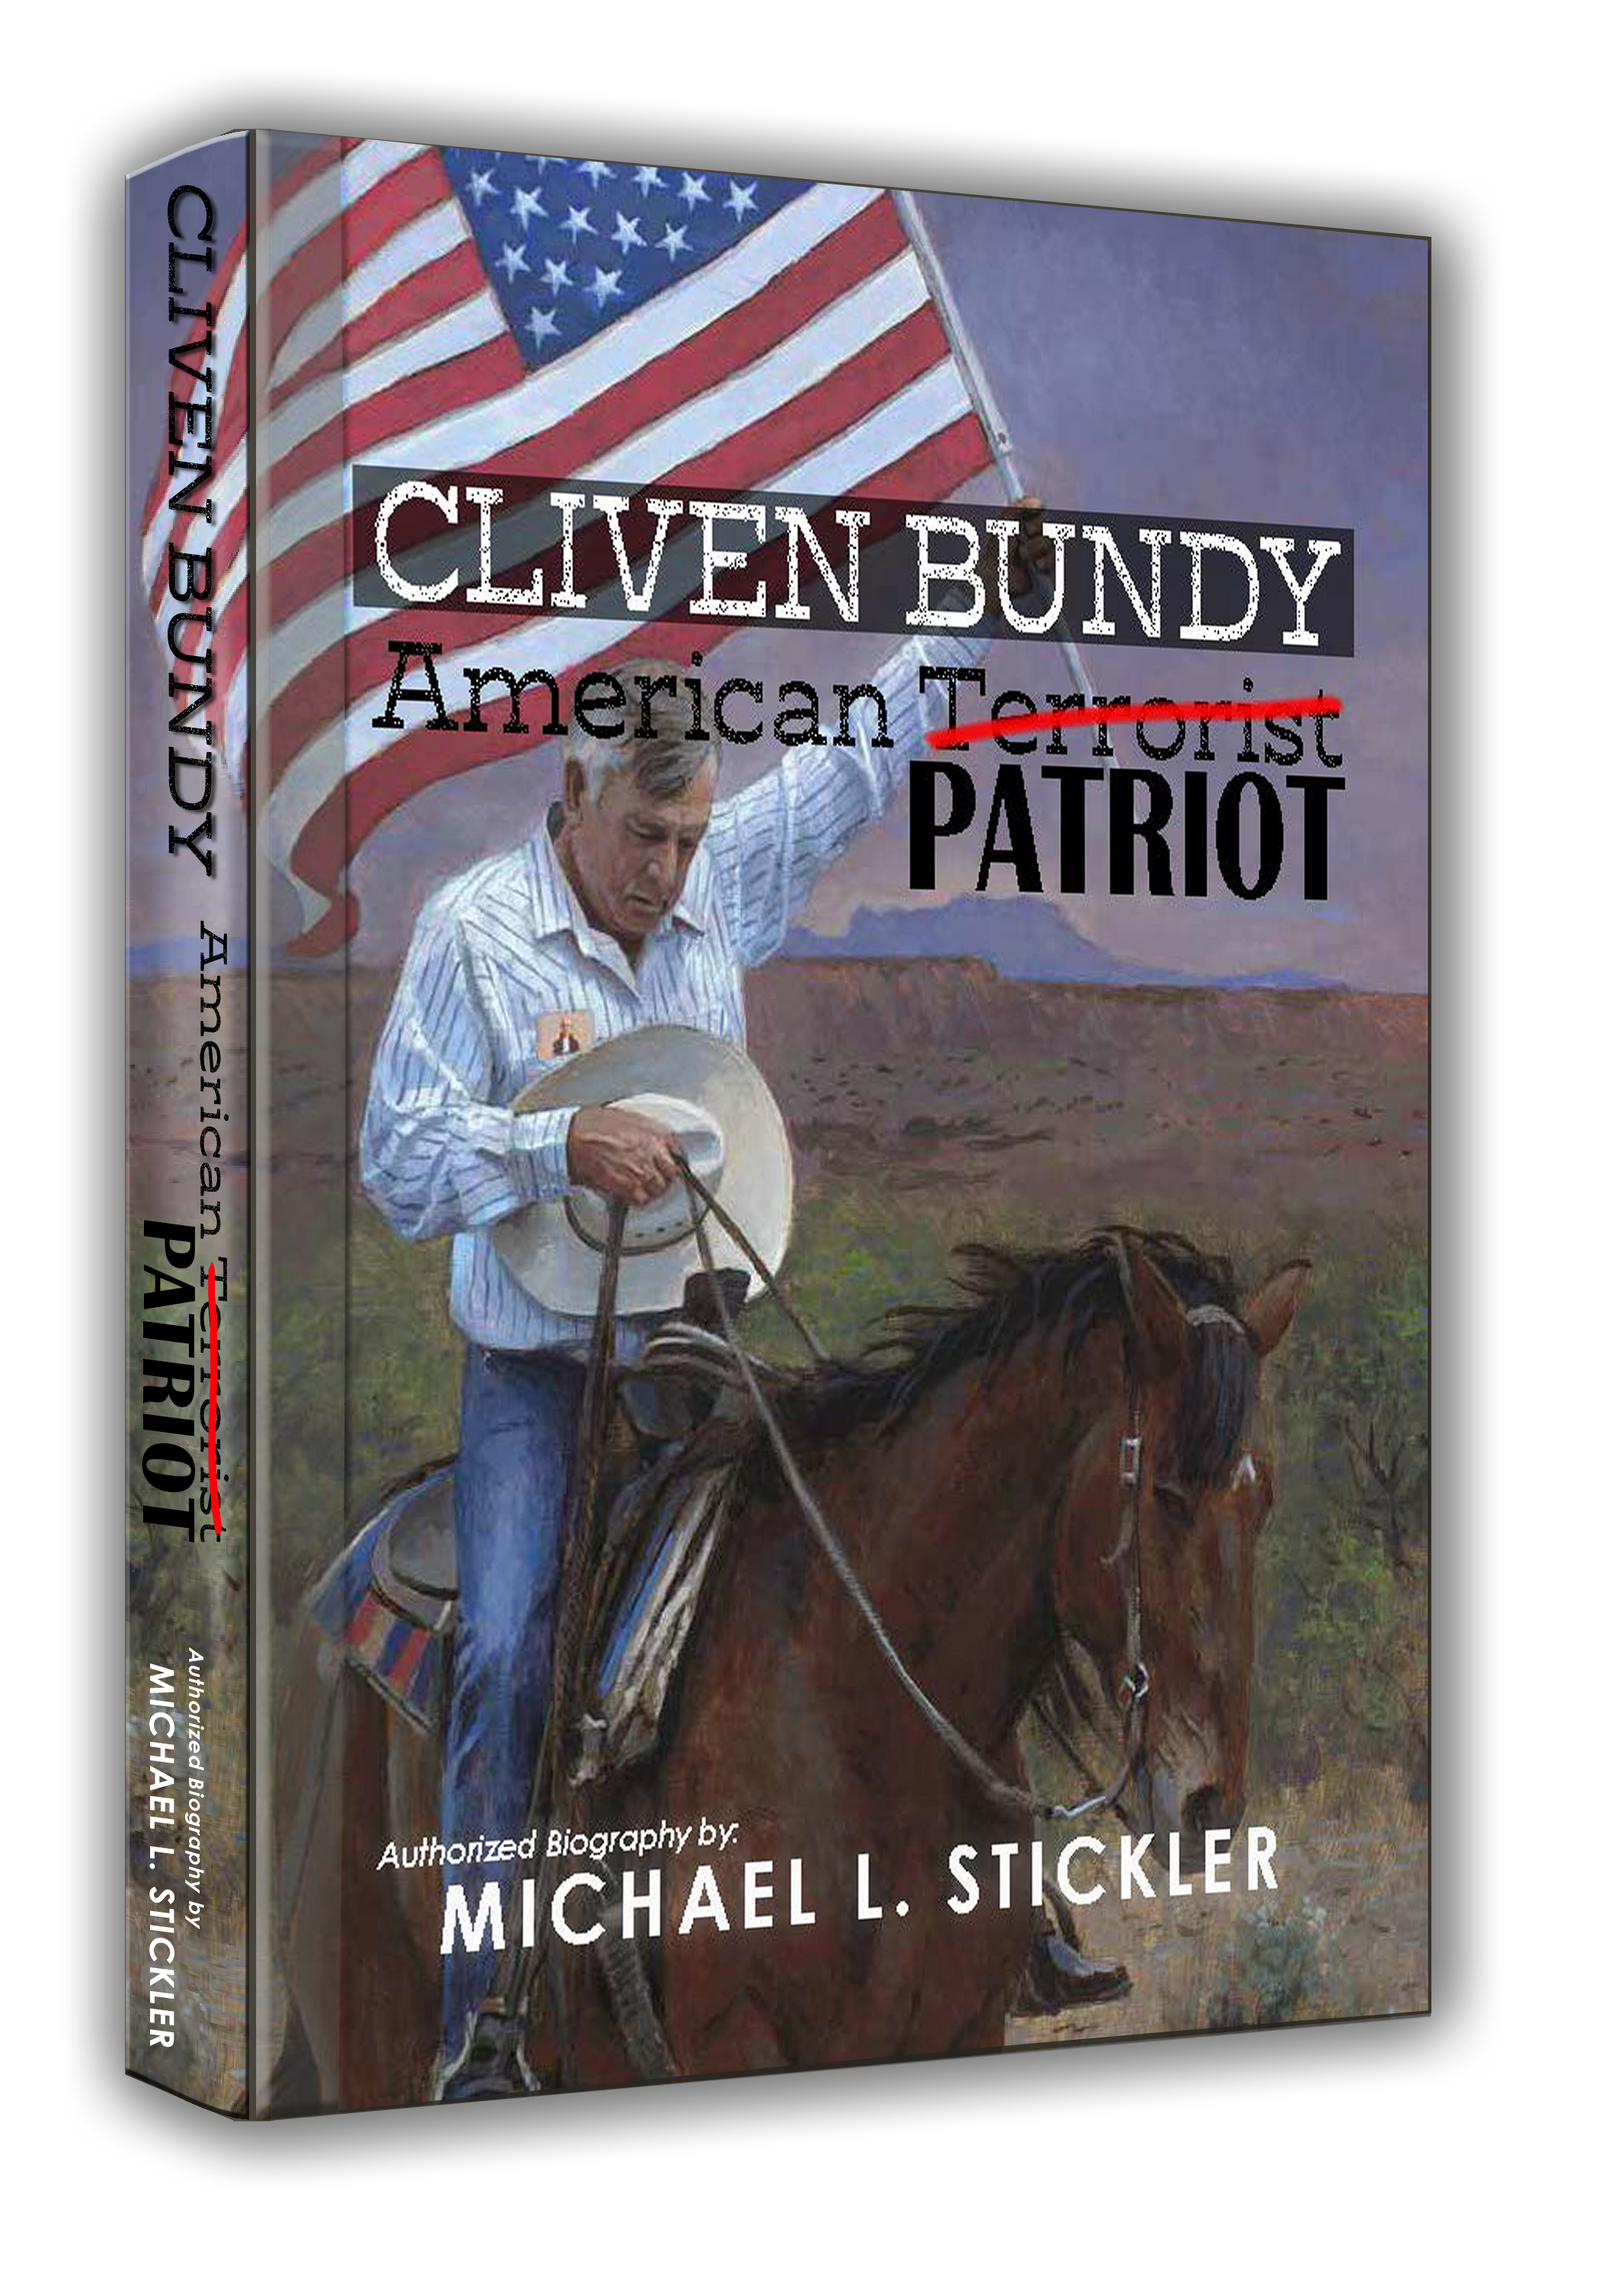 Cliven Bundy American Patriot - Combination Package